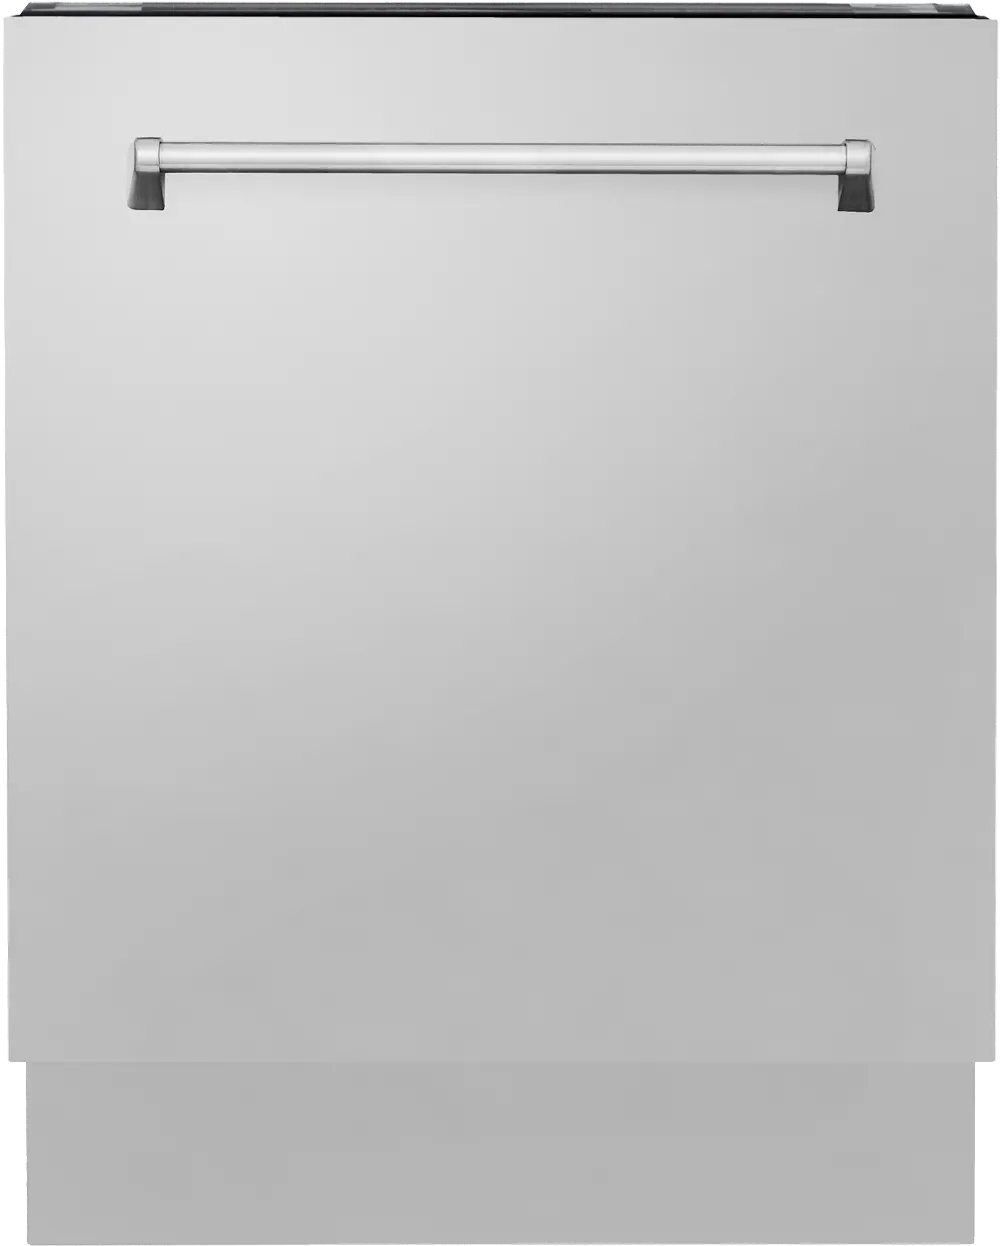 DWV-304-24 ZLINE Tallac Series Top Control Dishwasher - Stainless Steel-1